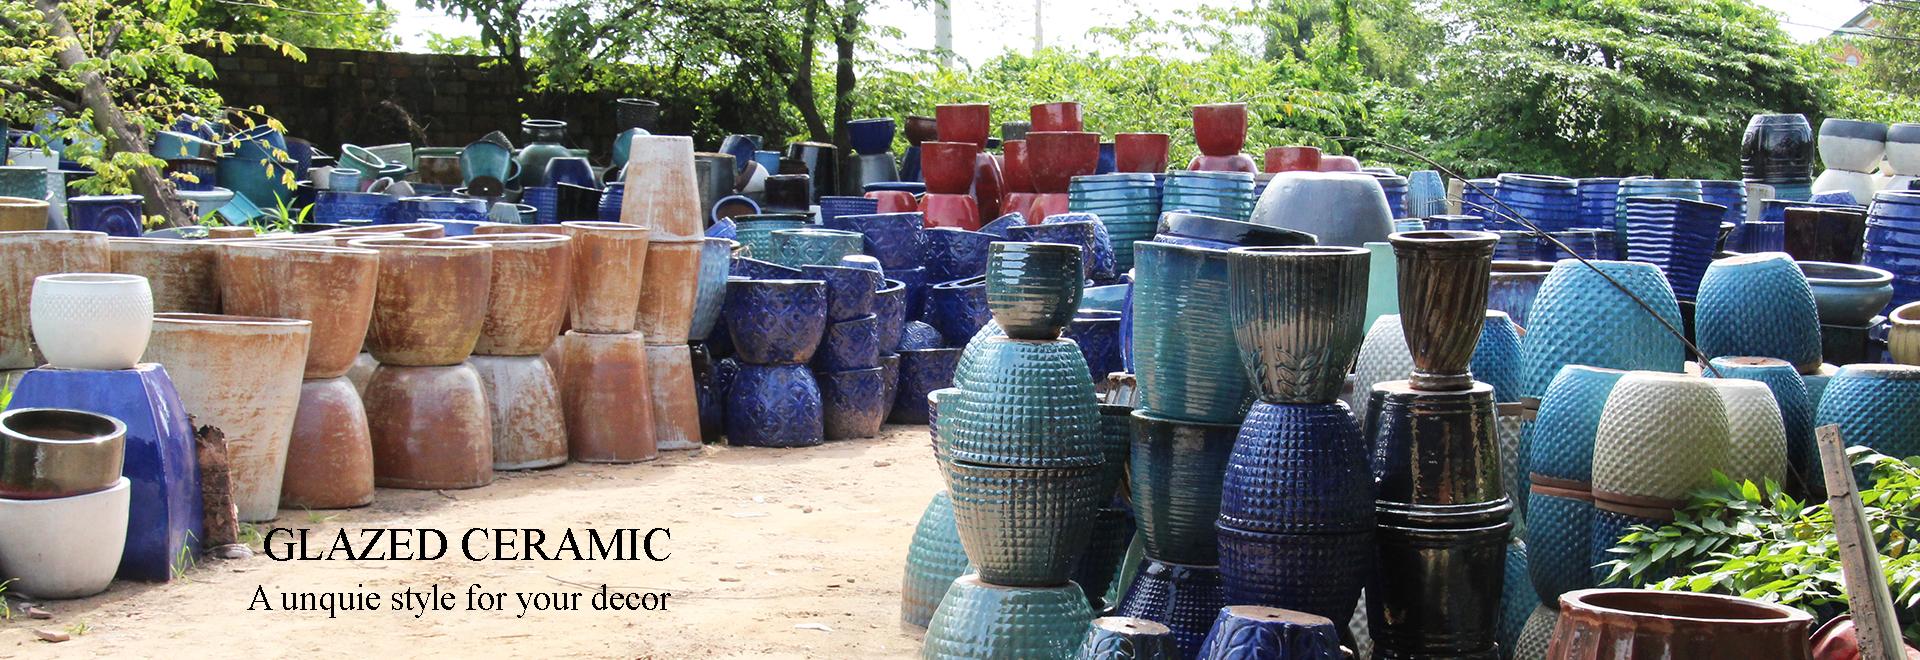 vietnamese-glazed-ceramic-plant-pot-and-planter